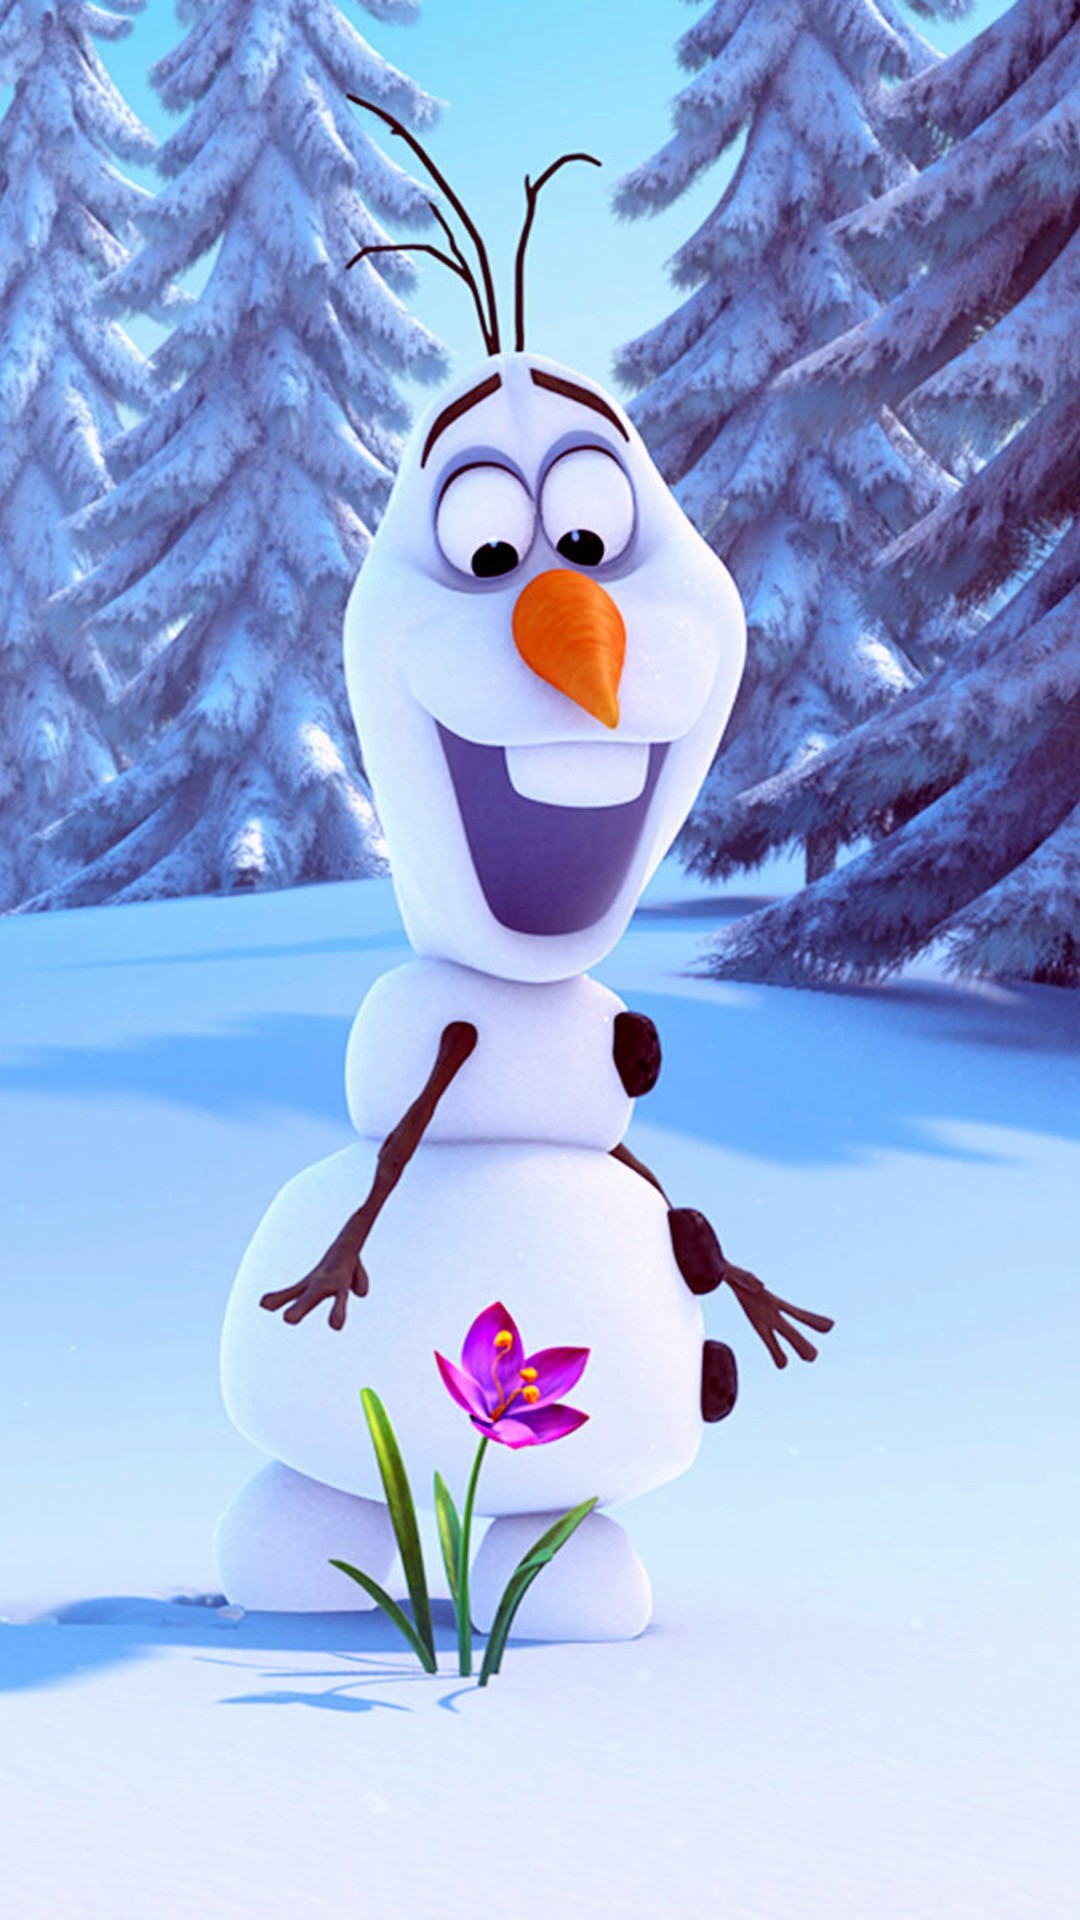 Olaf Frozen iPhone 6 plus wallpaper for 2014 Halloween – Flower, Snow  Trees, Wonderland